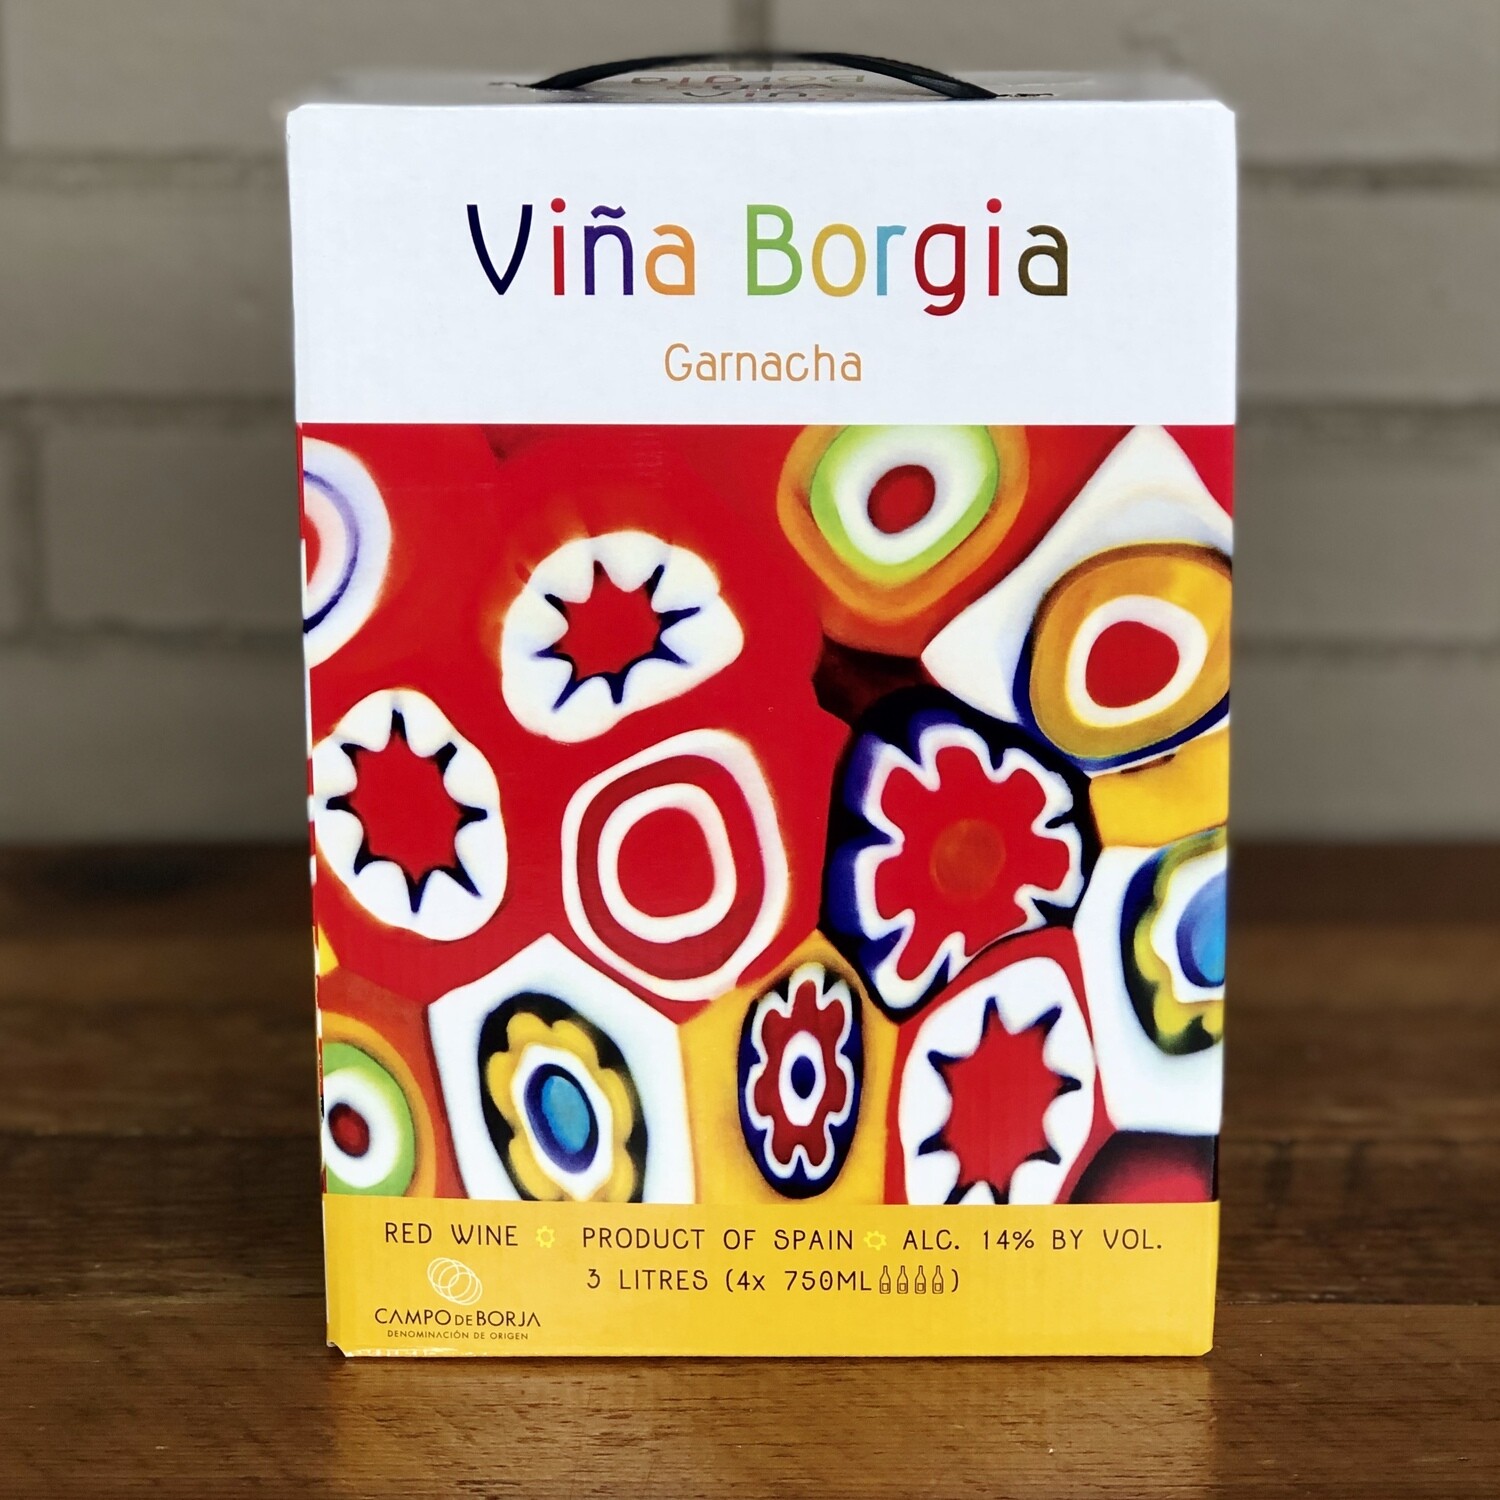 Viña Borgia Garnacha (3L Box)